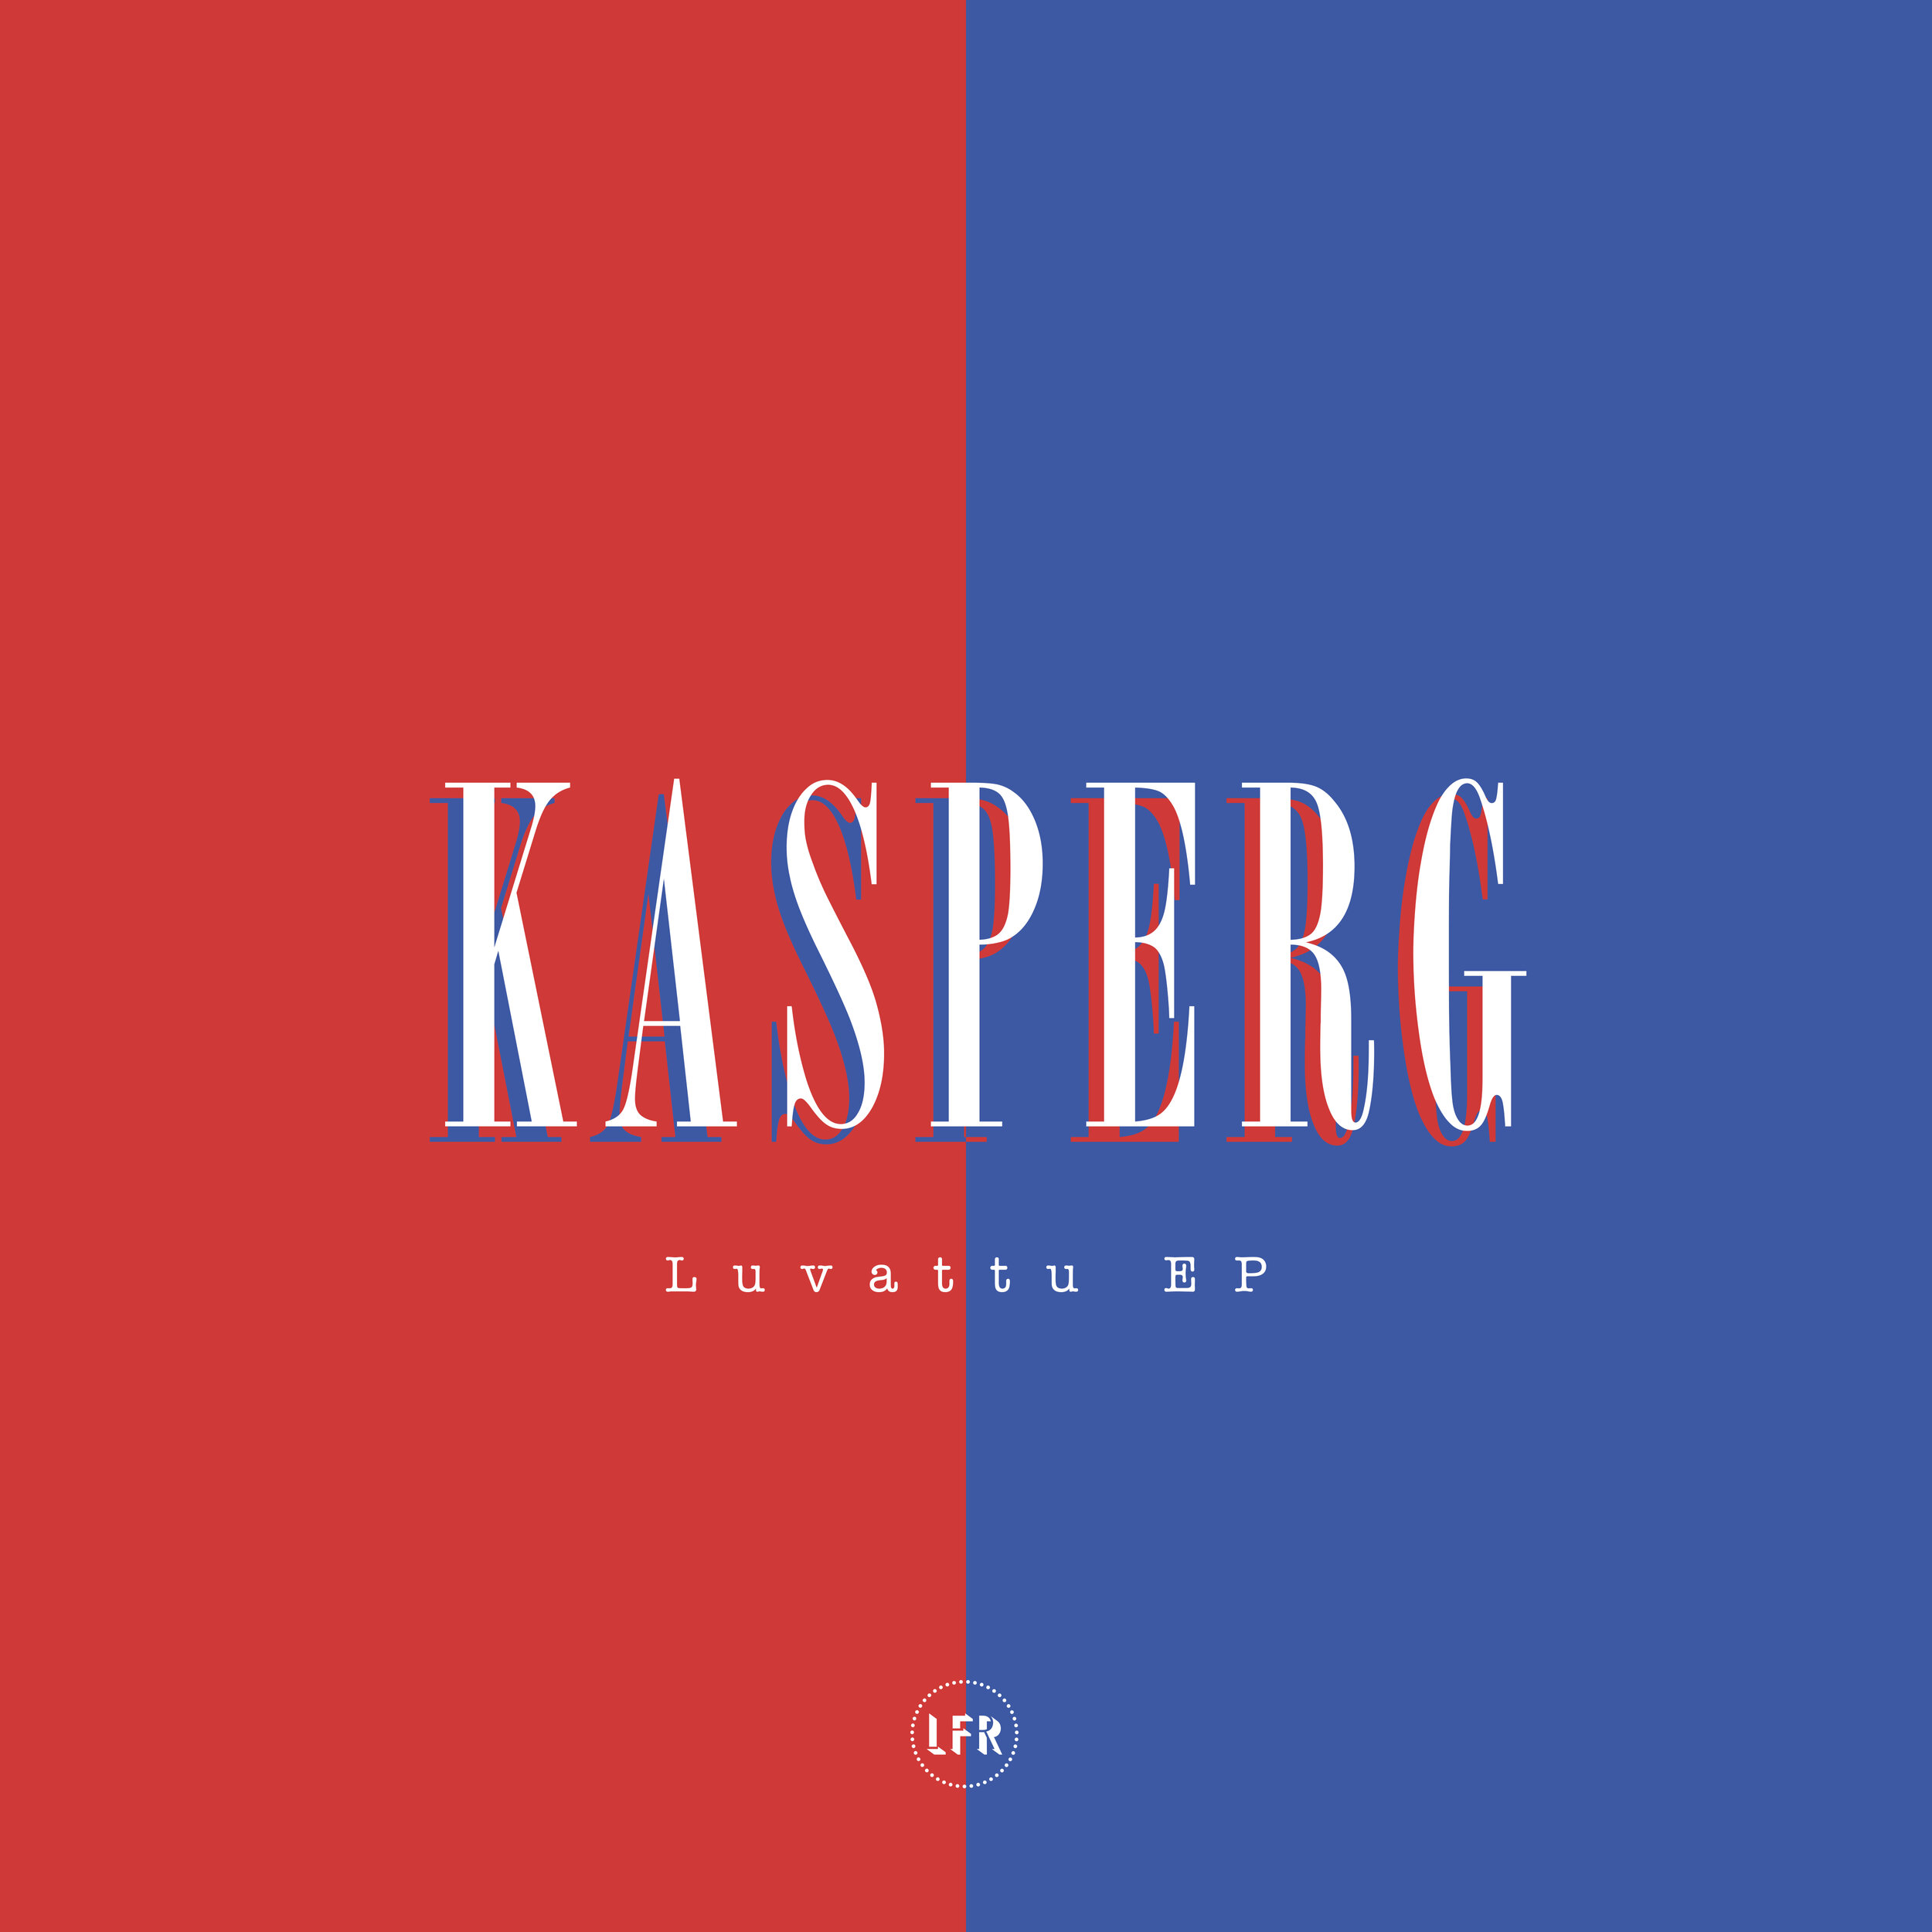  Luvattu EP by KASPERG  01 - Last Night 02 - One Like Me 03 - Before My Eyes 04 - Barricade 05 - Lose Me 06 - Way Out 